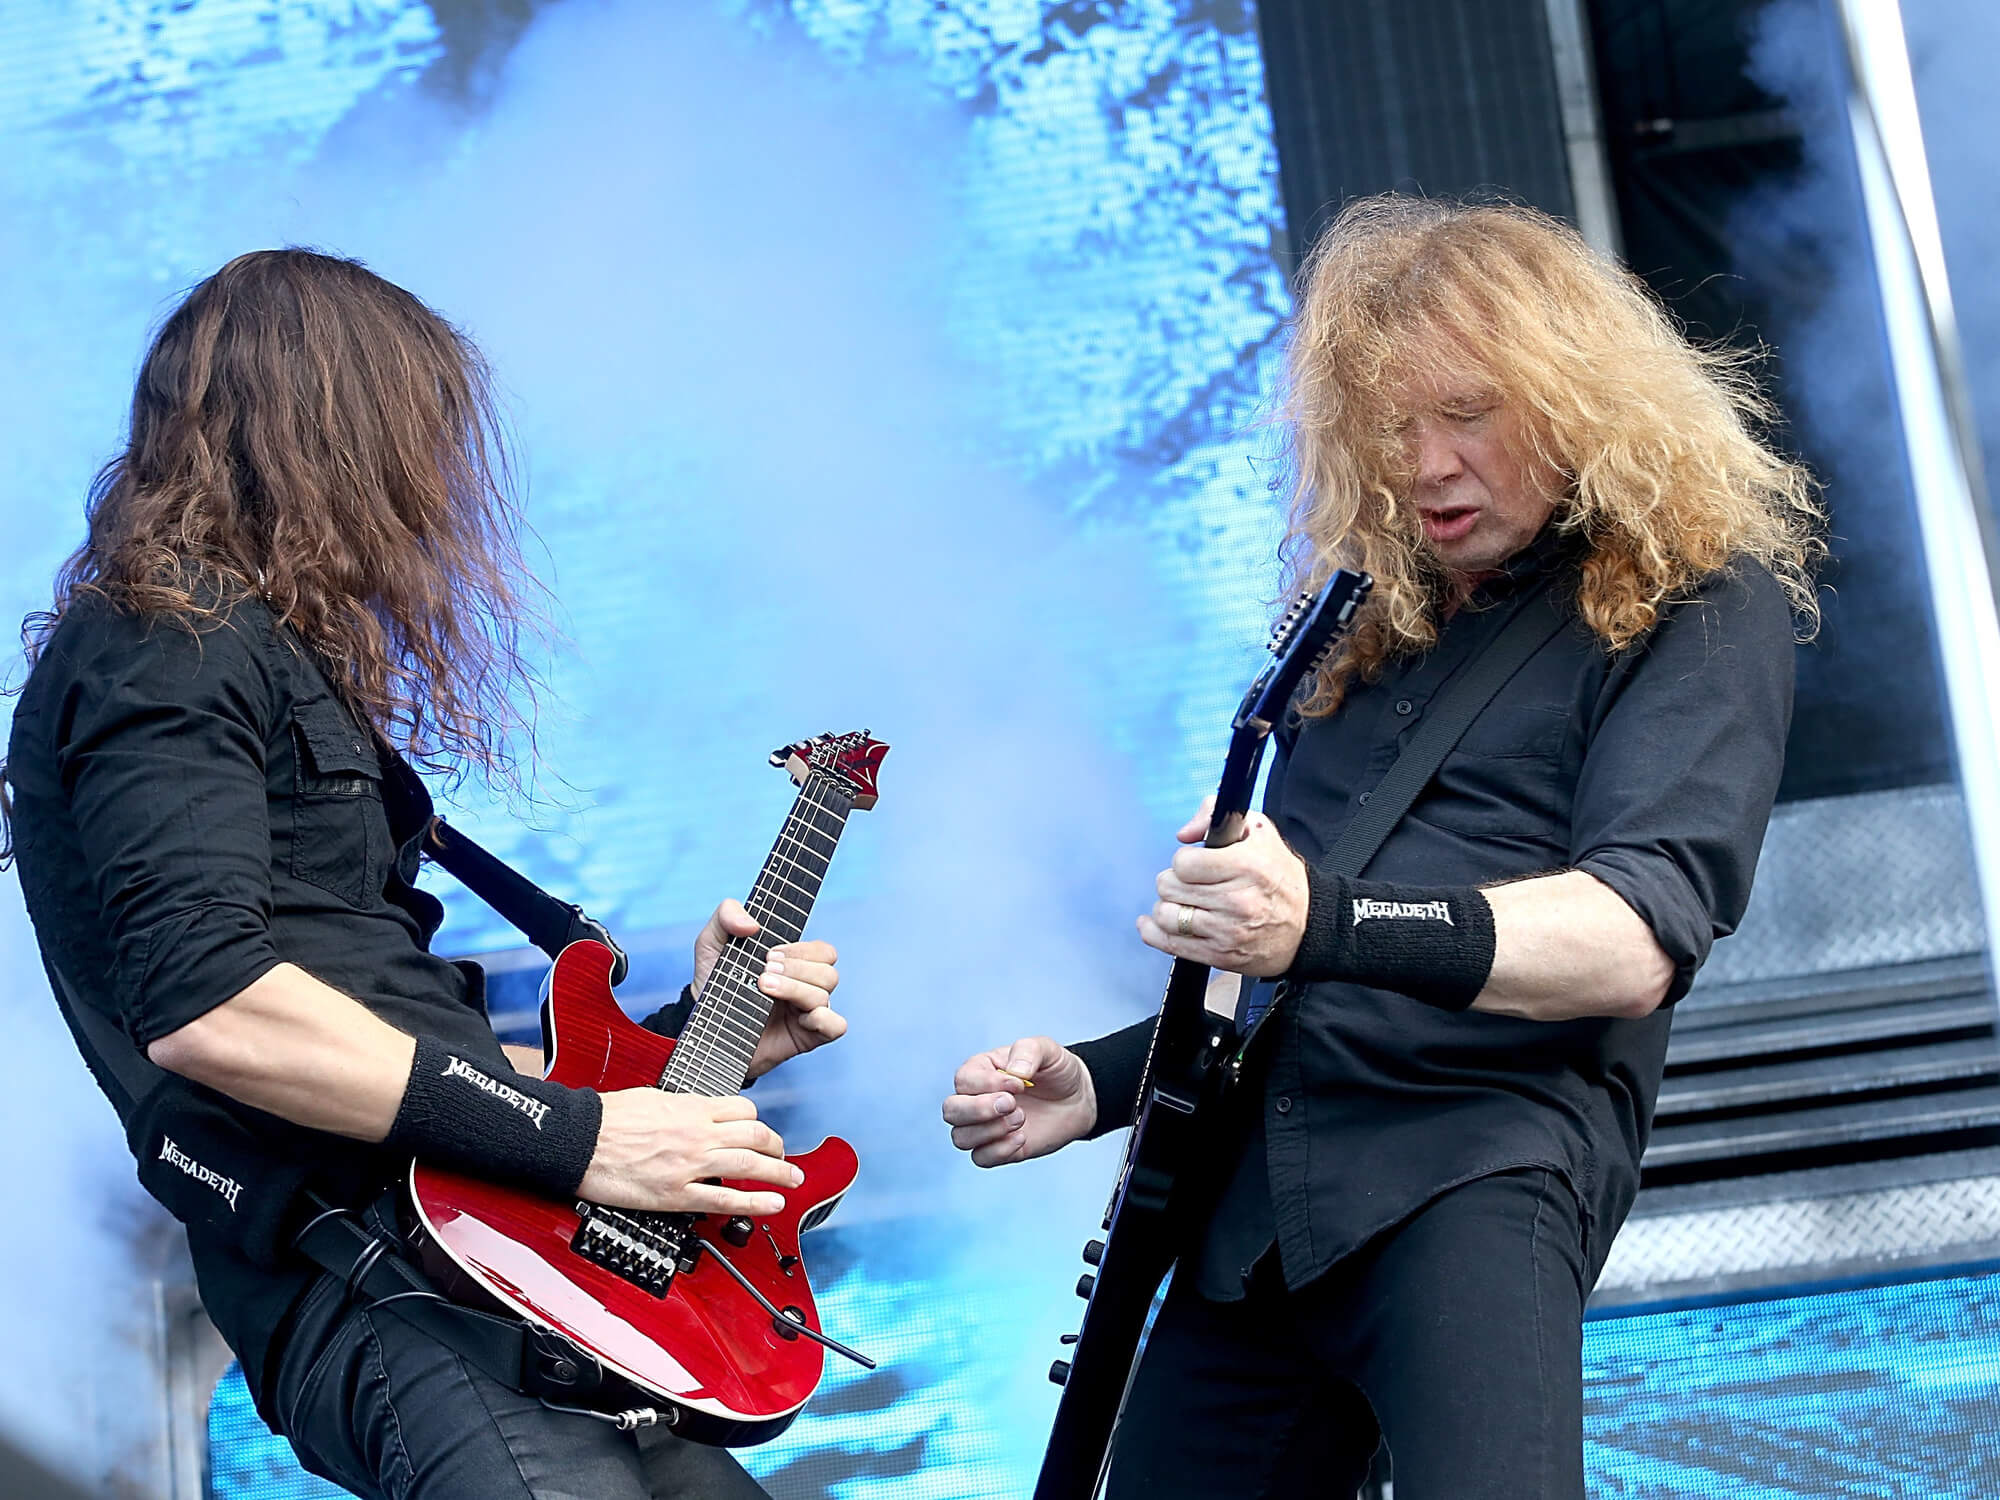 Kiko Loureiro and Dave Mustaine playing guitar